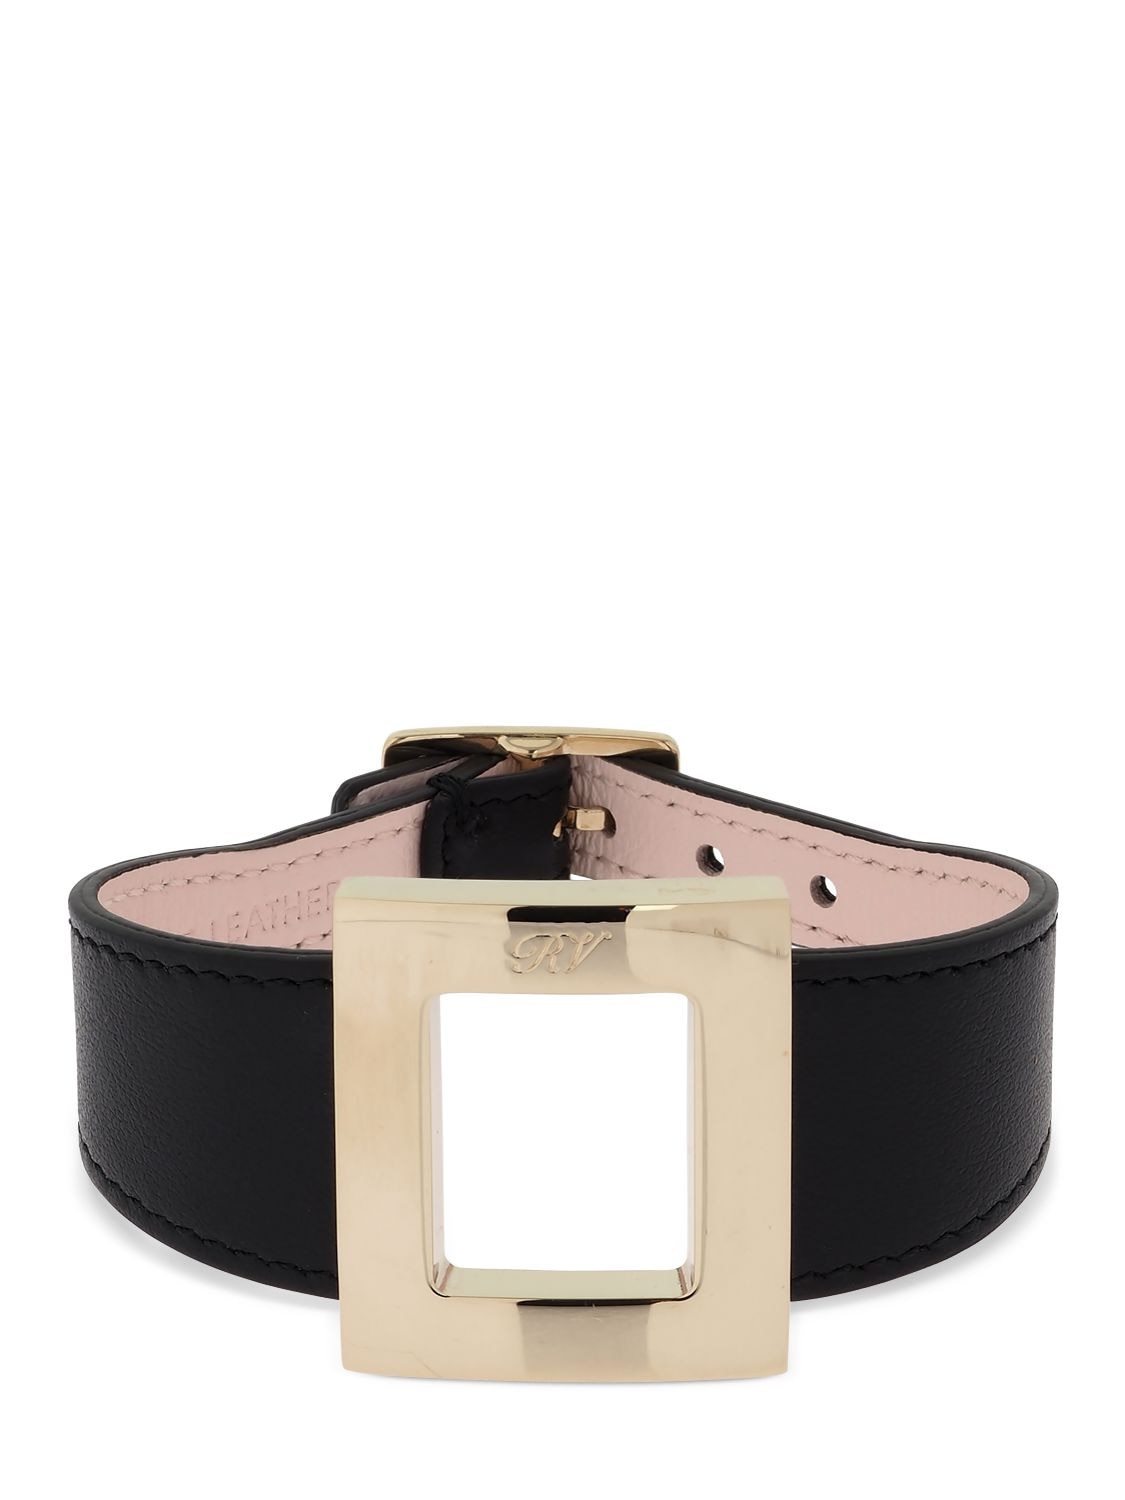 Roger Vivier Leather Bracelet W/ Metal Buckle In Black